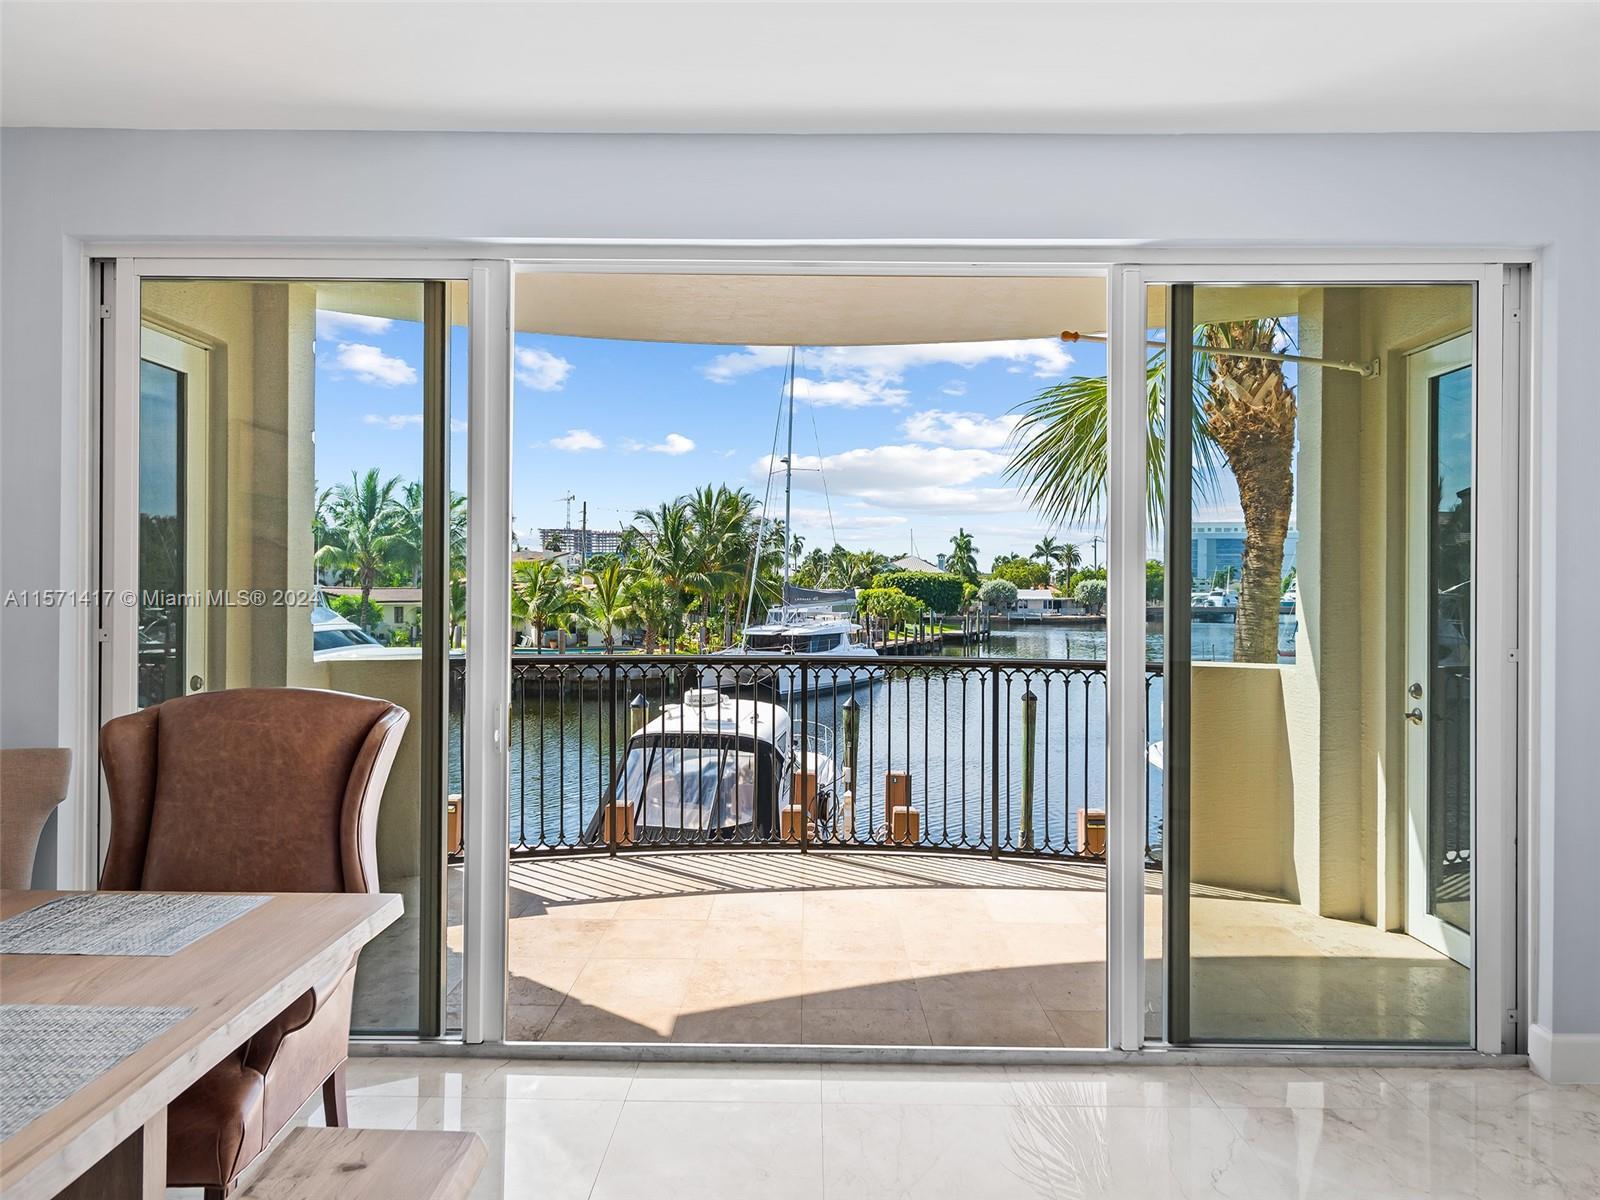 Embrace waterfront luxury at Rio Vista's Hemingway Landings. This elegant lowrise boasts 2 beds, 2.5